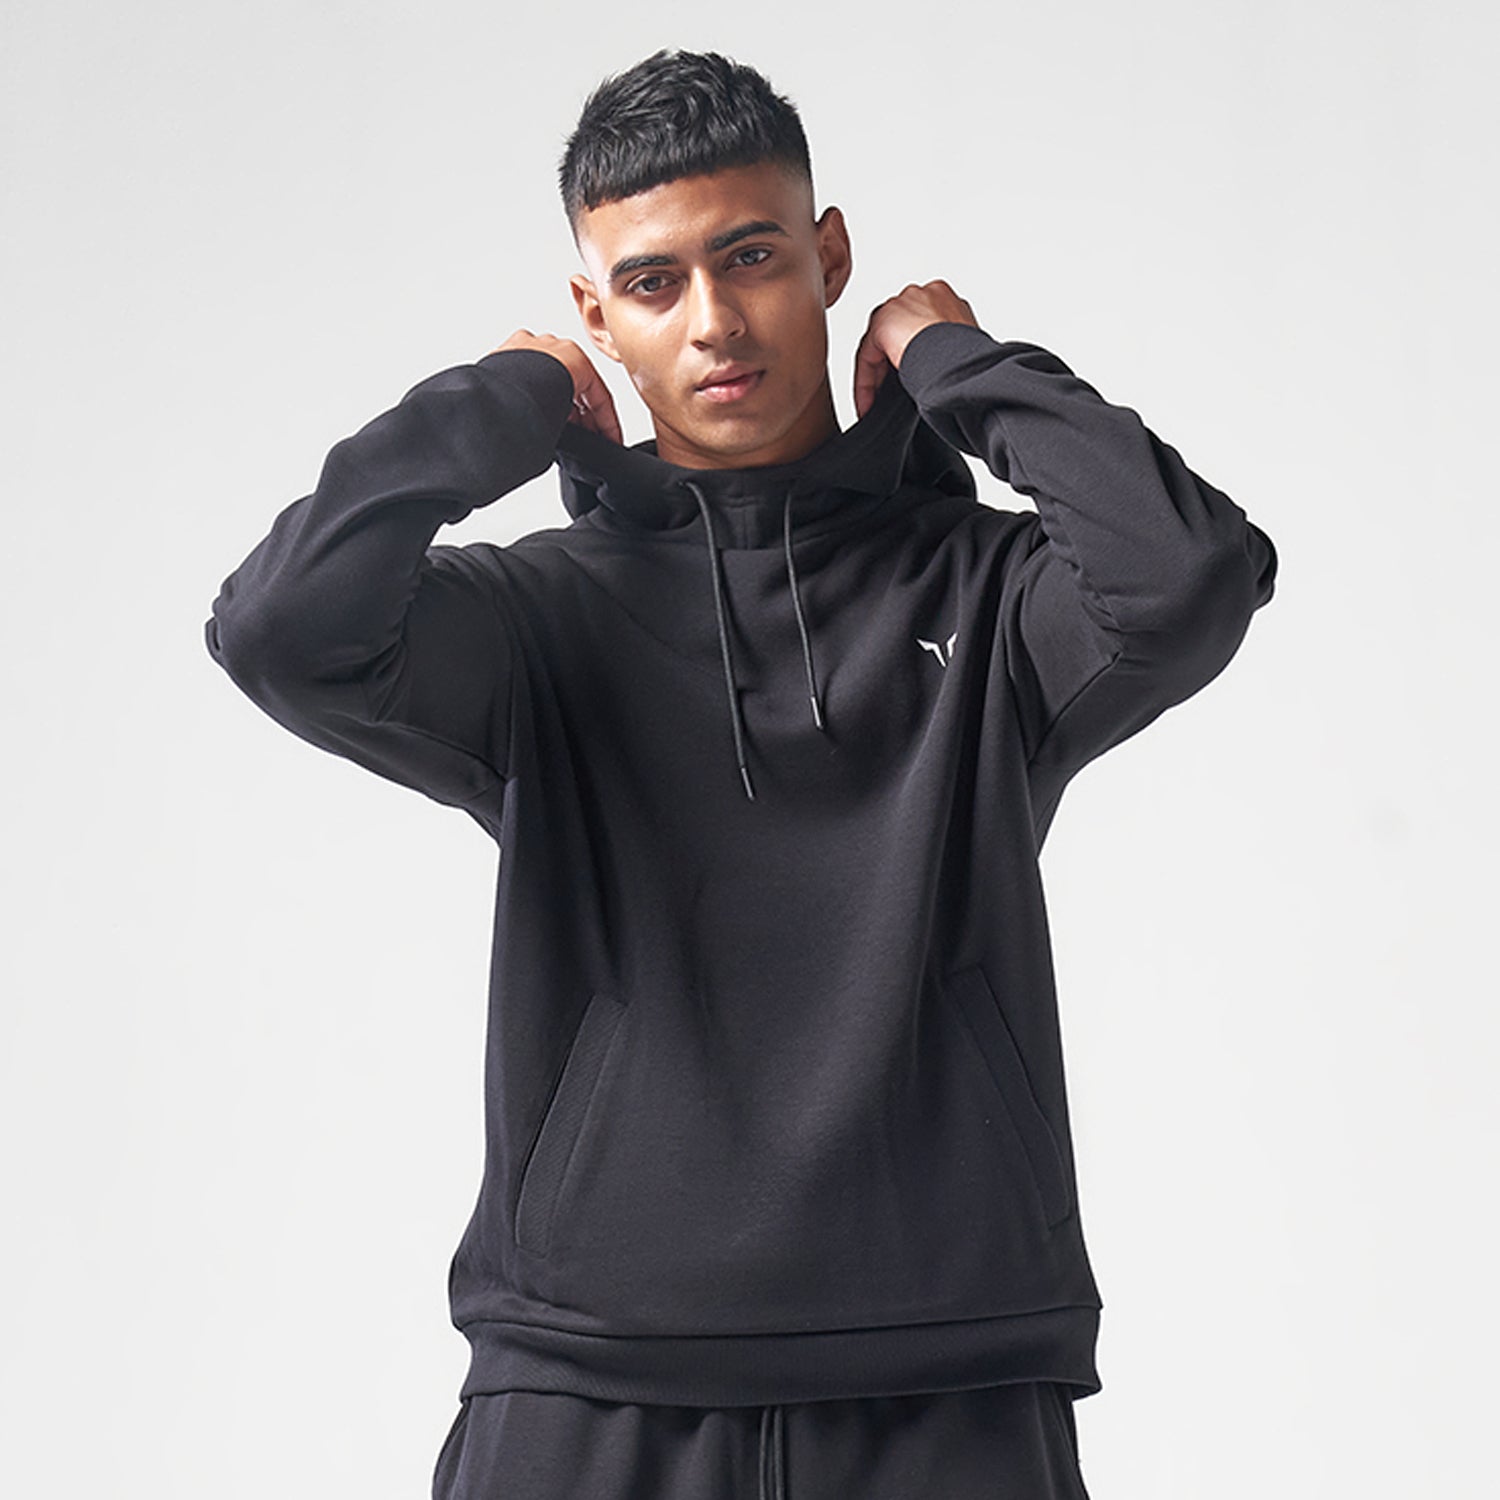 squatwolf-gym-wear-essential-hoodie-black-workout-hoodie-for-men